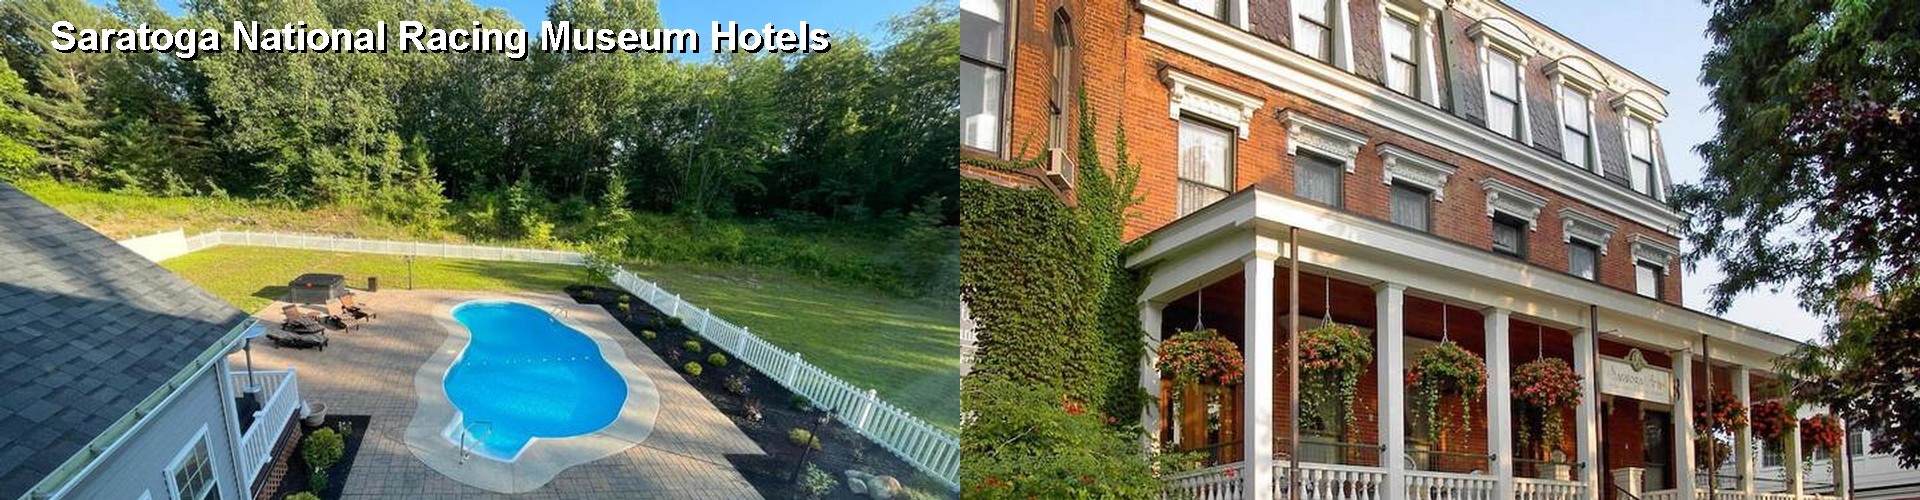 5 Best Hotels near Saratoga National Racing Museum